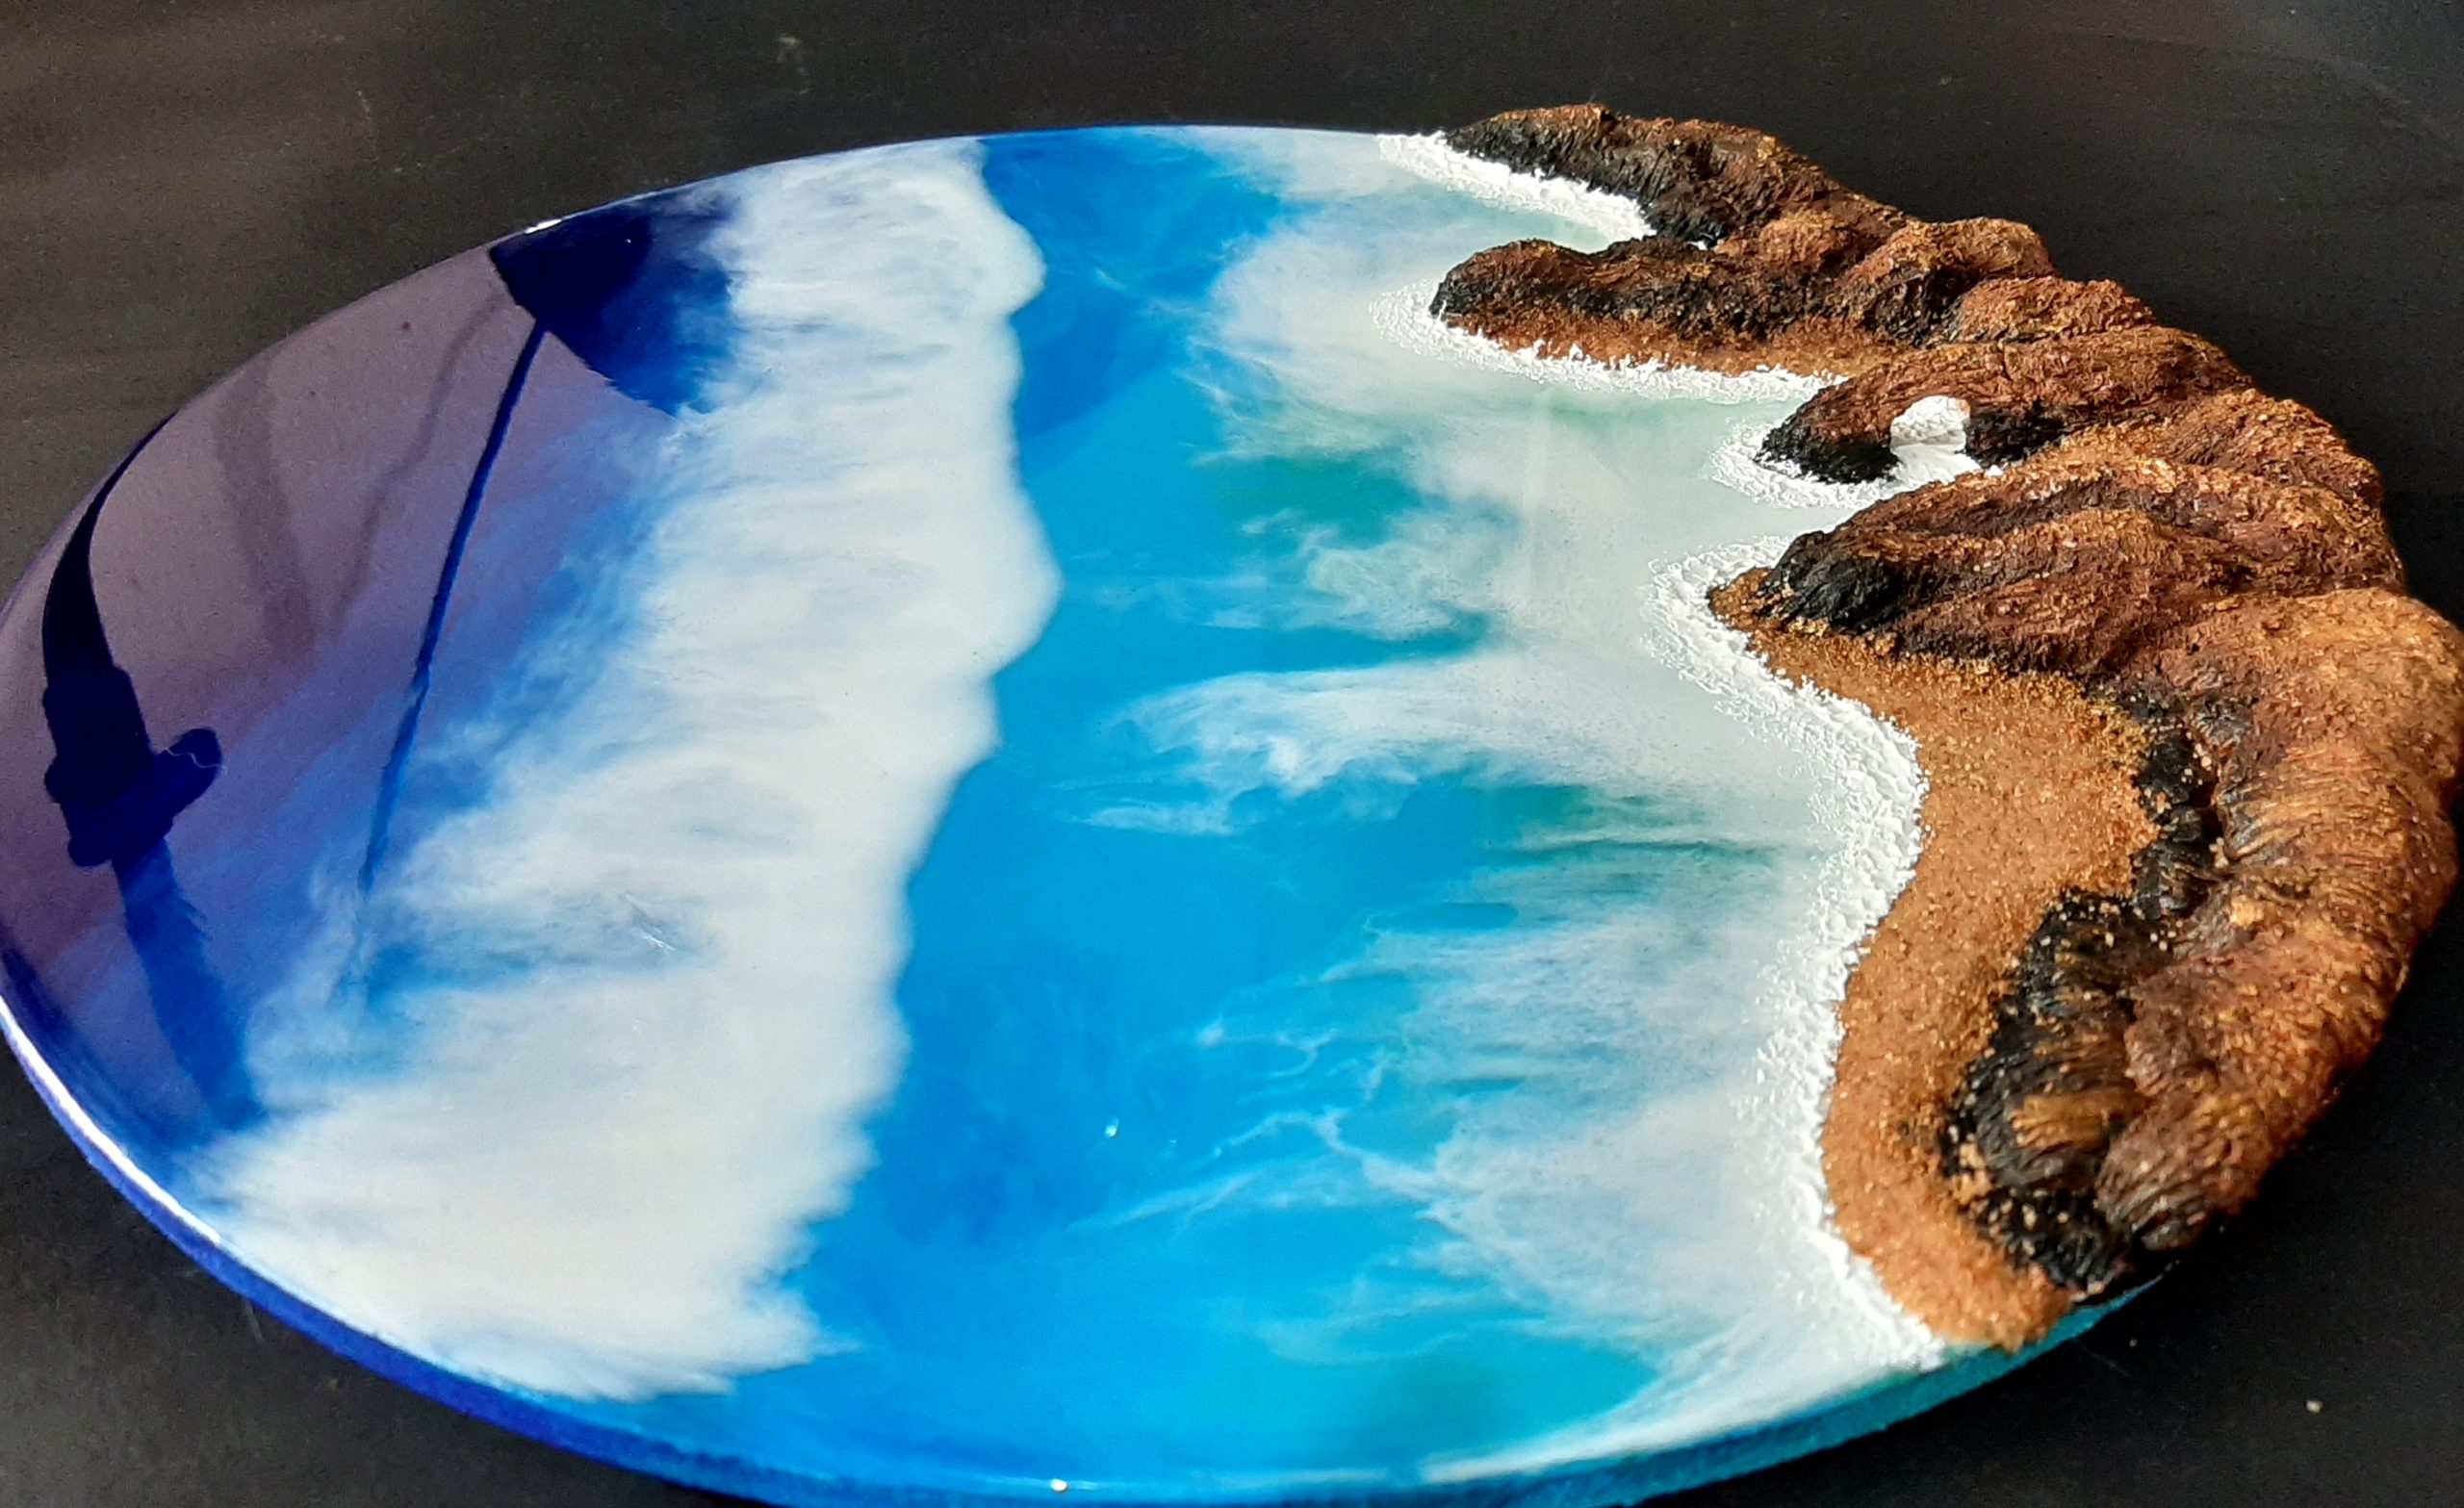 3D OCEAN RESIN ART CREATIVE ART